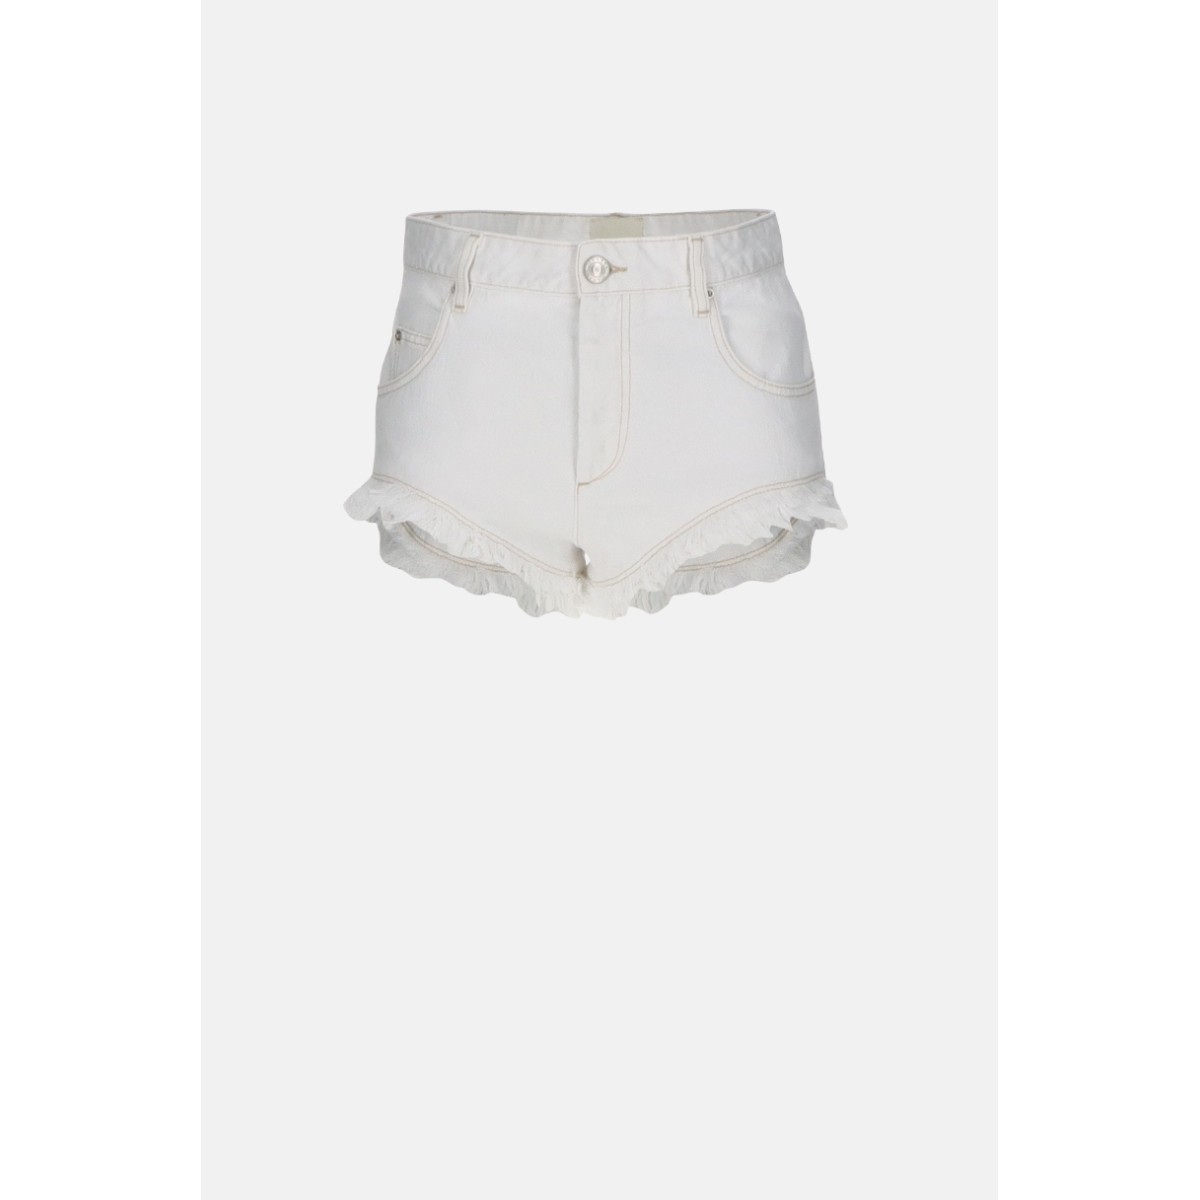 Eneidao" shorts Isabel Marant